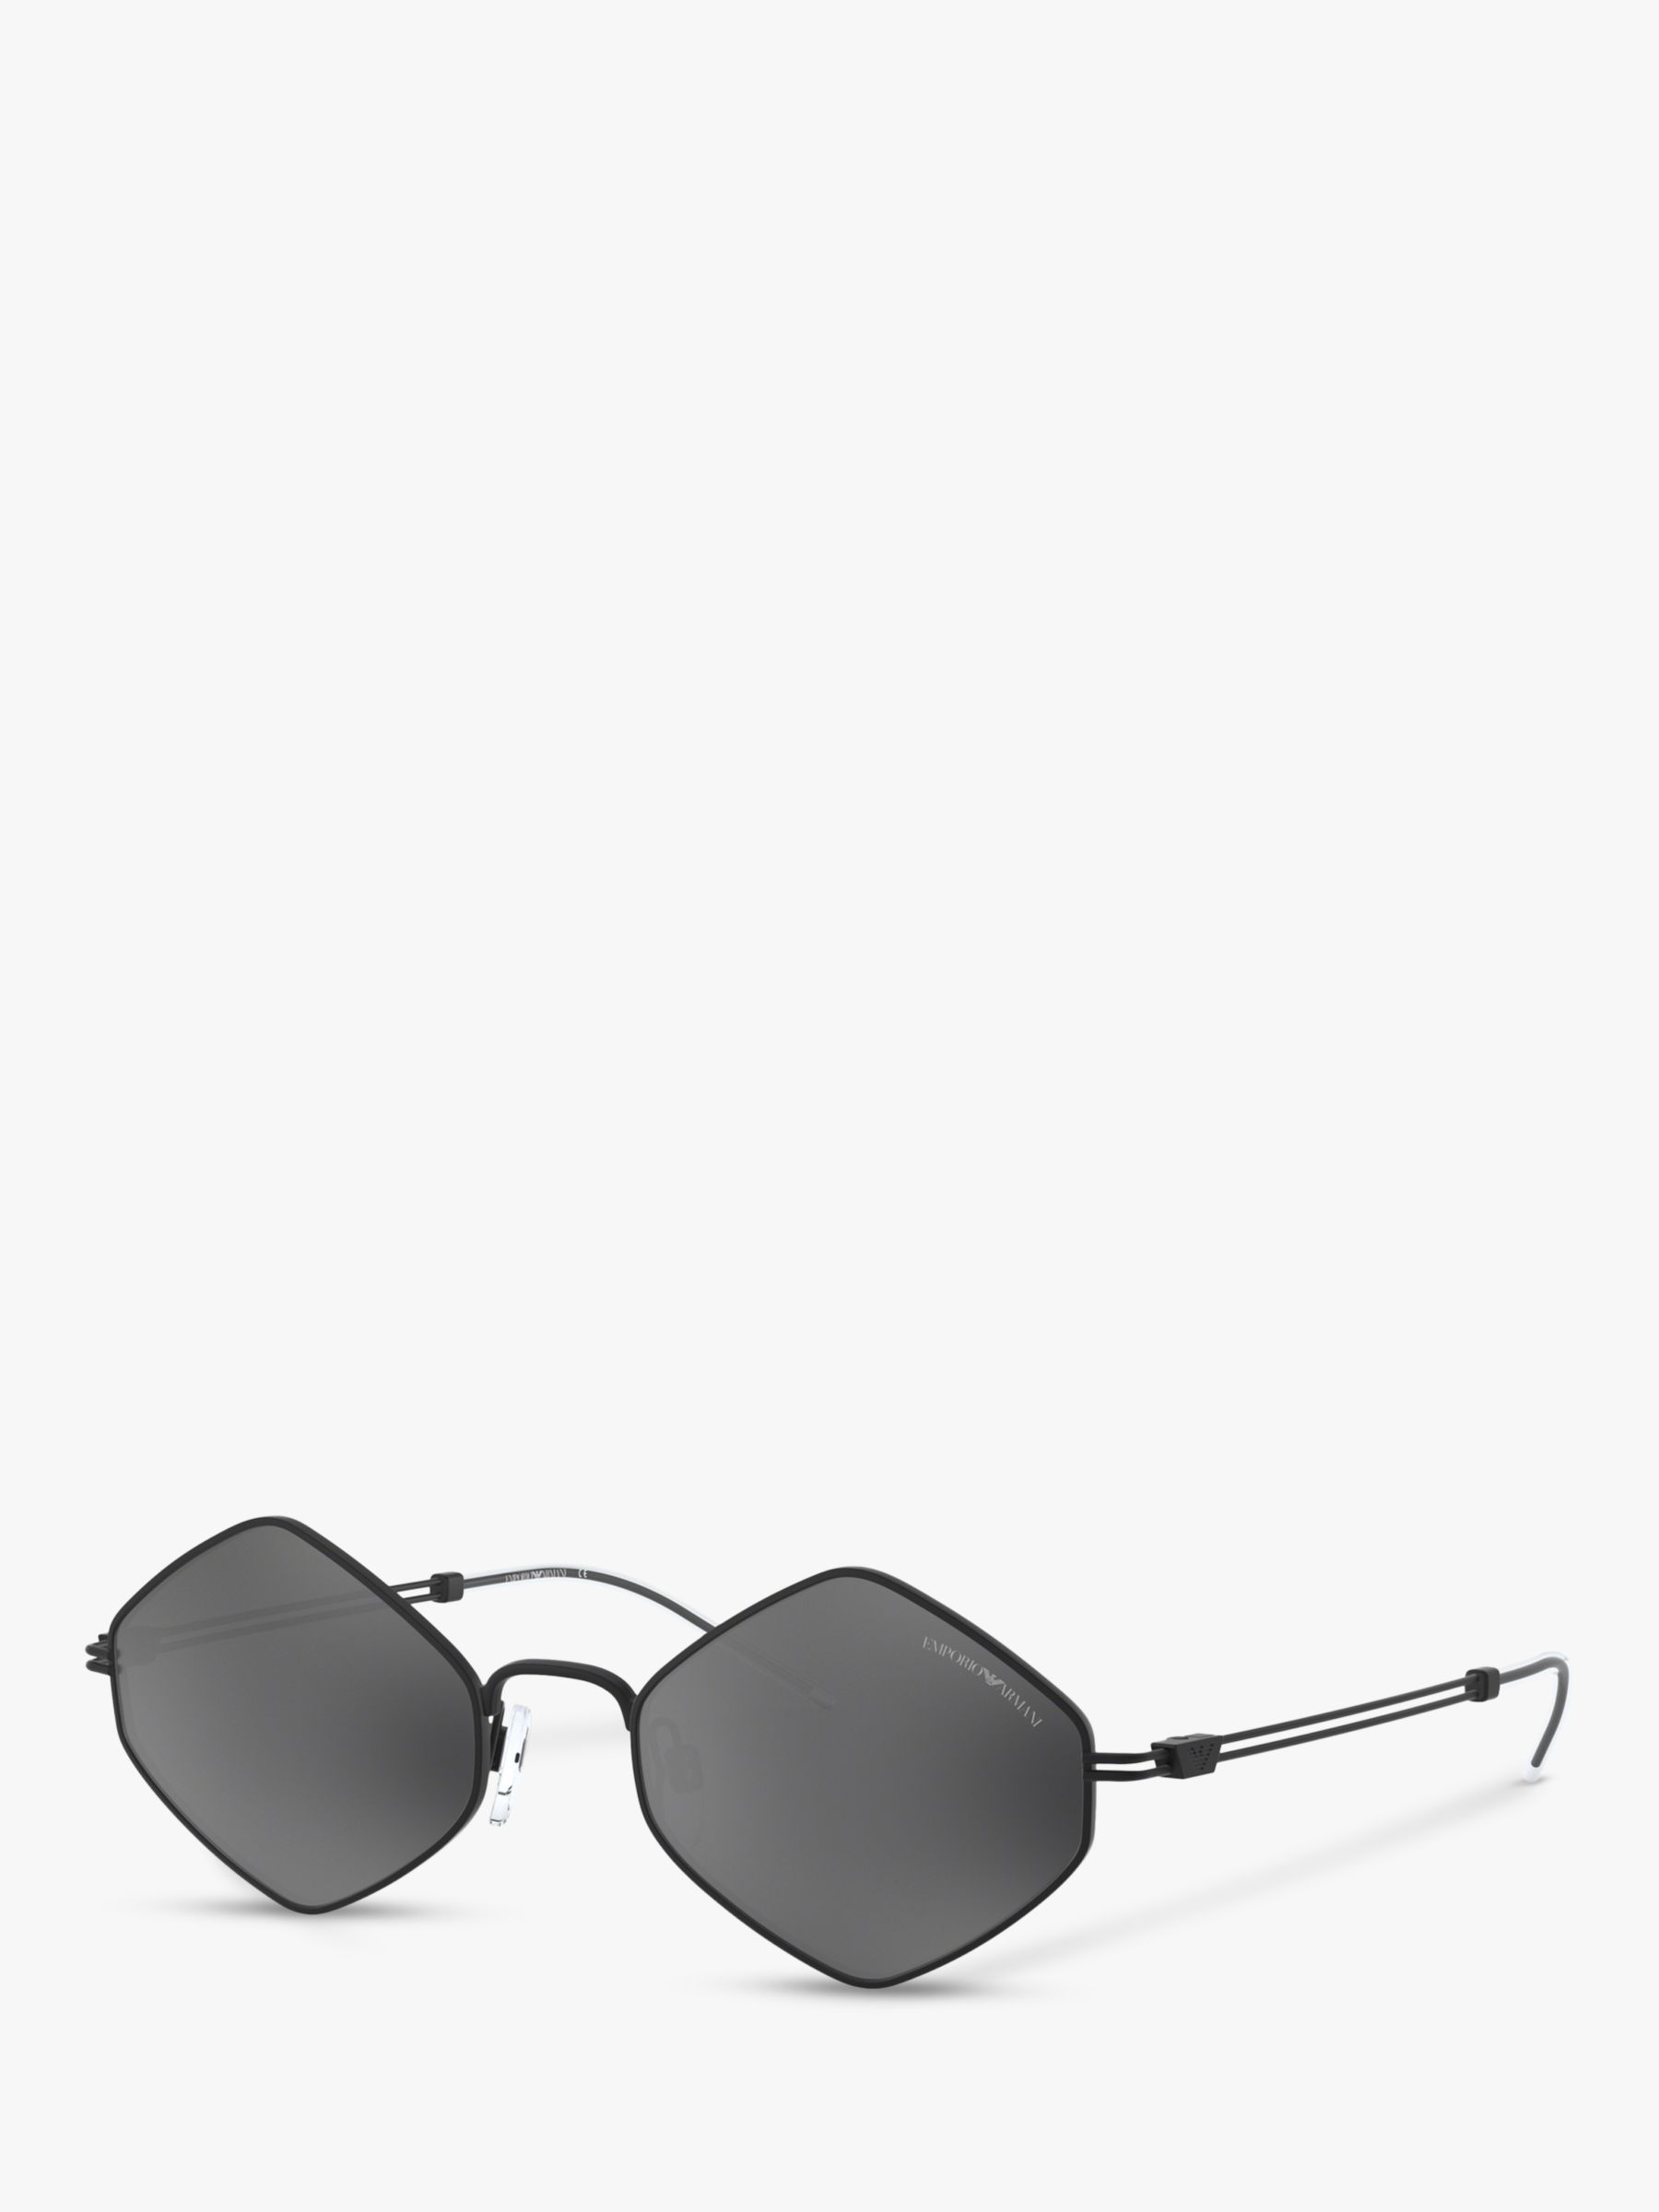 Emporio Armani EA2085 Men's Irregular Oval Sunglasses, Black/Grey